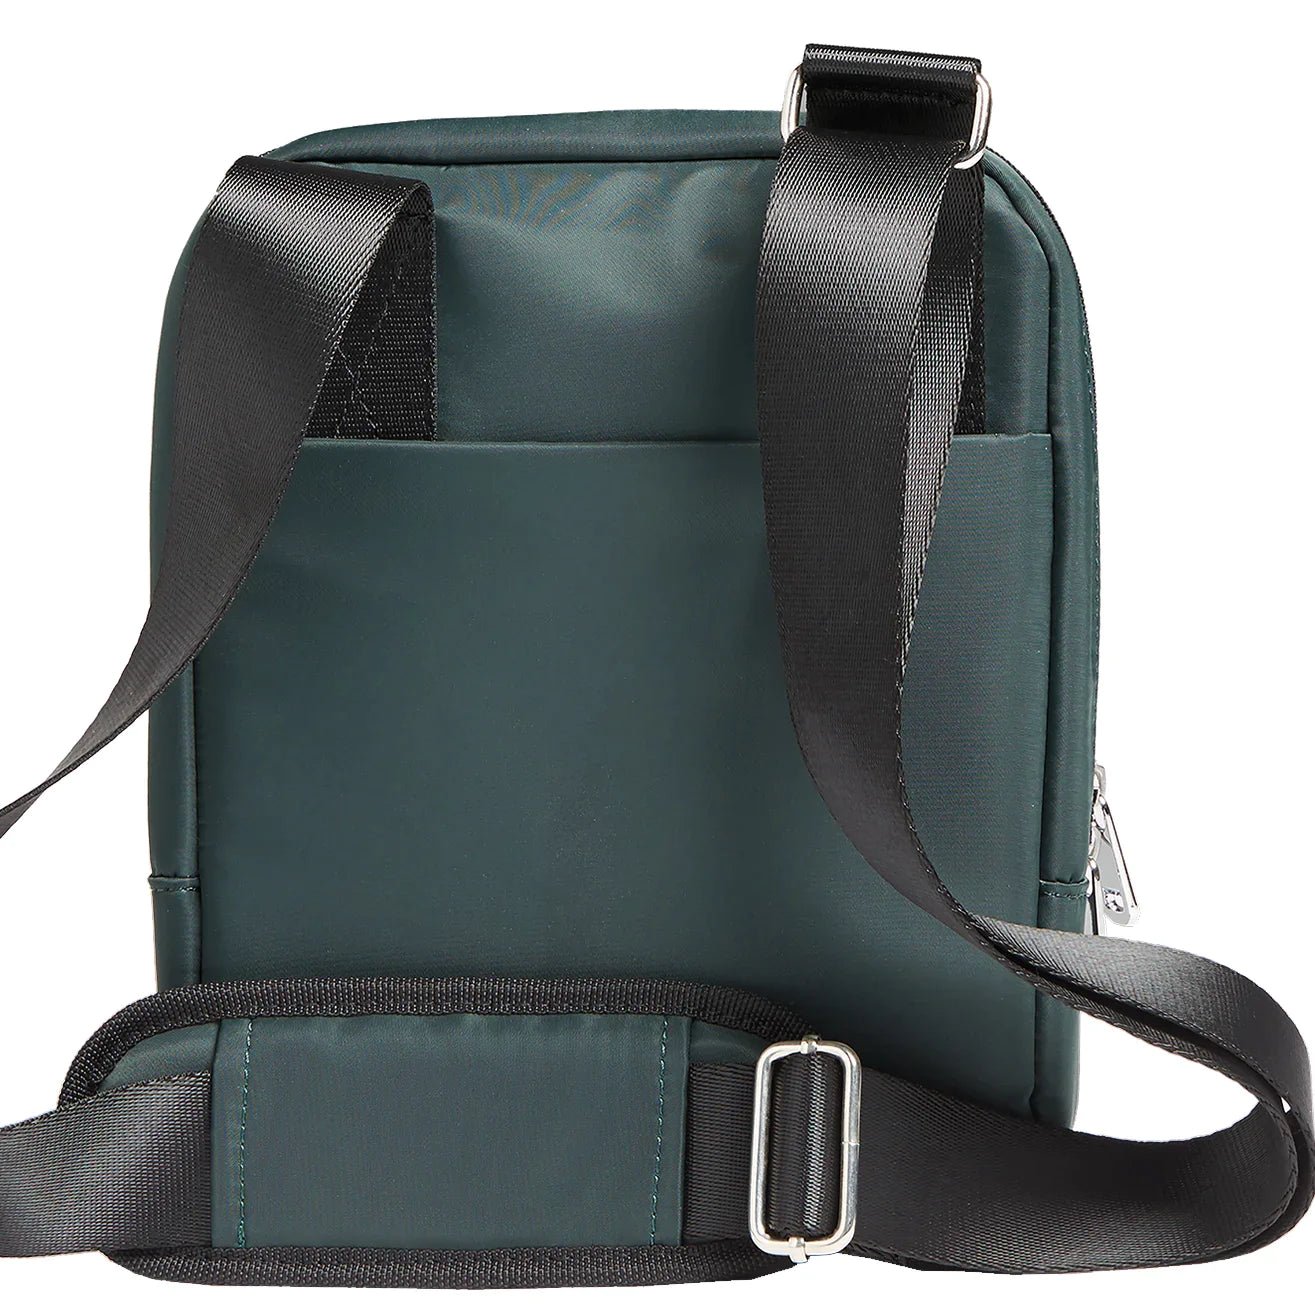 Stratic Pure Messenger Bag L 31 cm - Dark Green